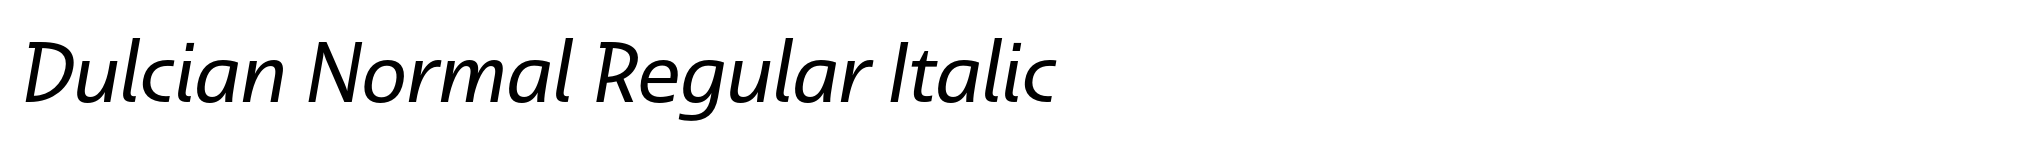 Dulcian Normal Regular Italic image